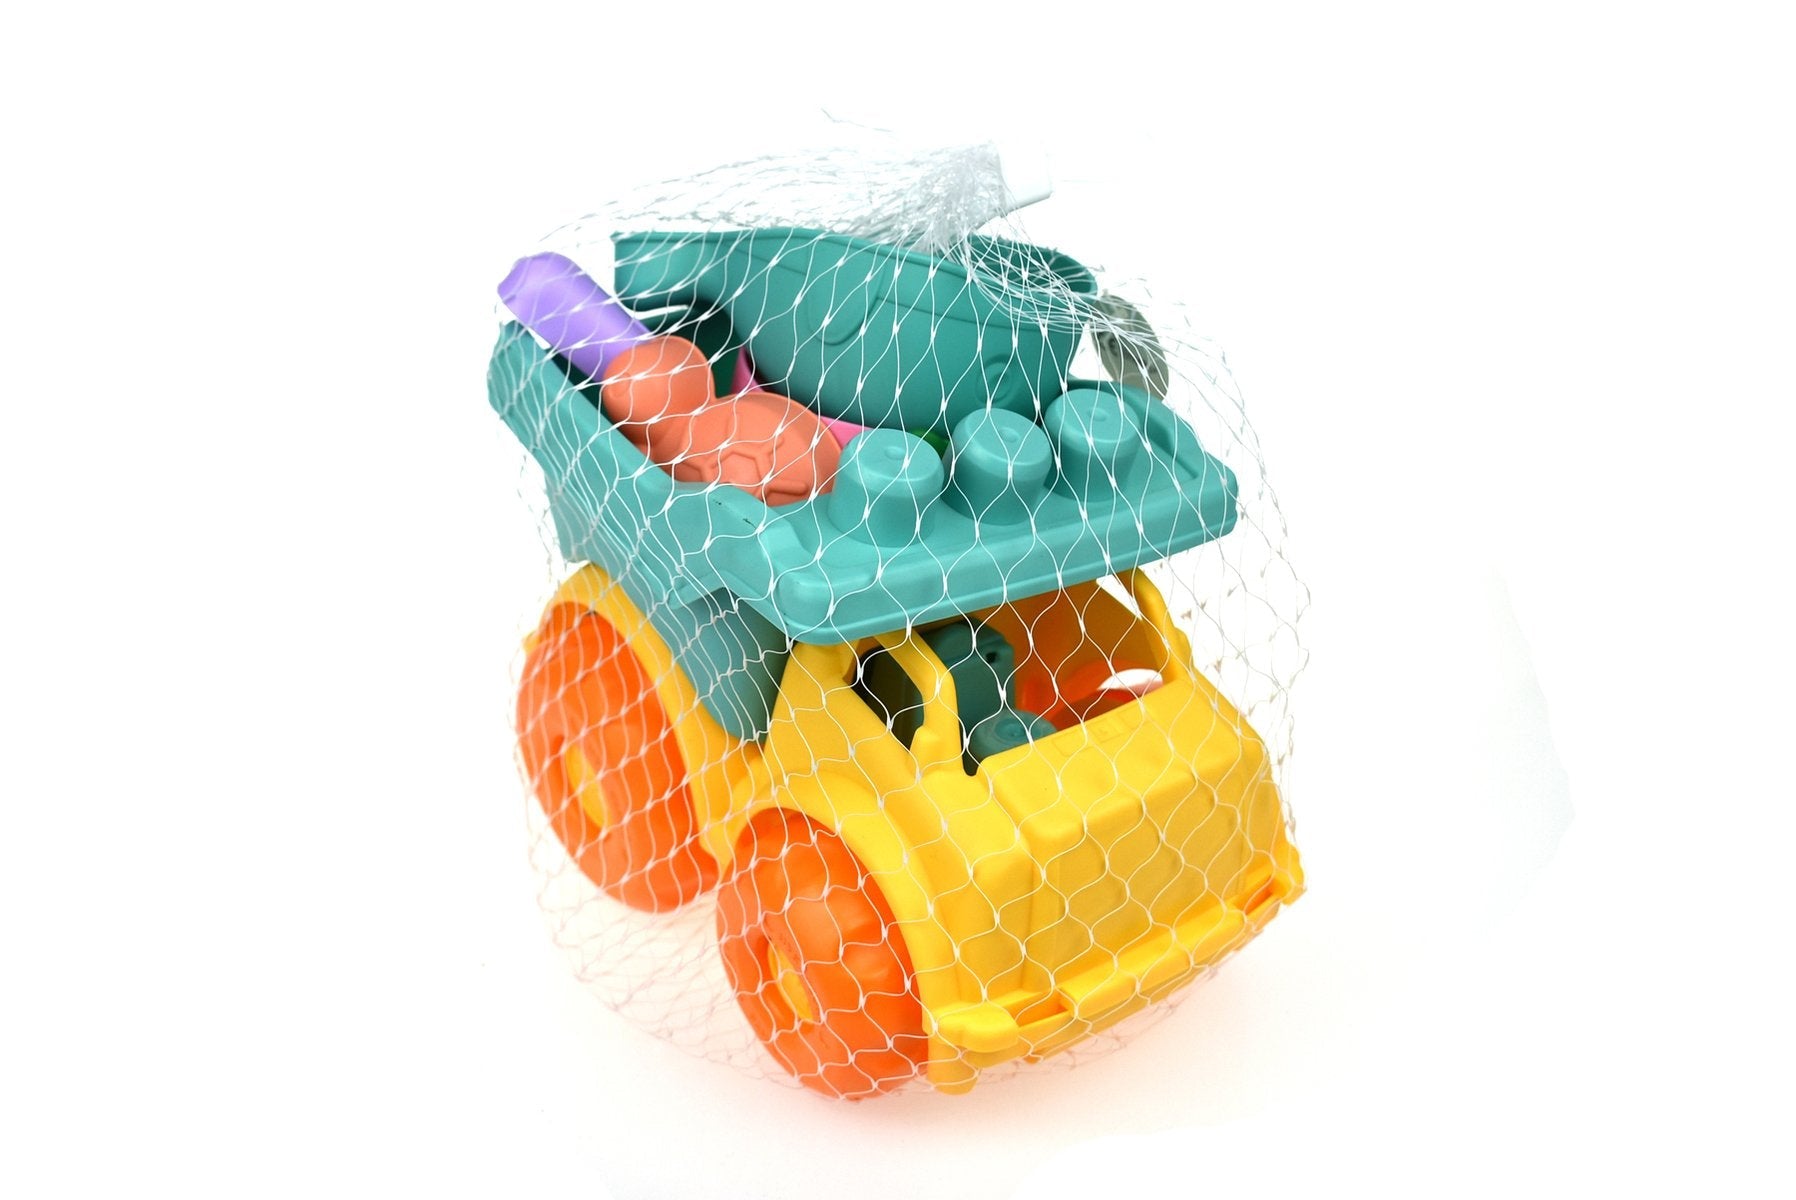 toys for infant Truck Beach Set 5Pcs